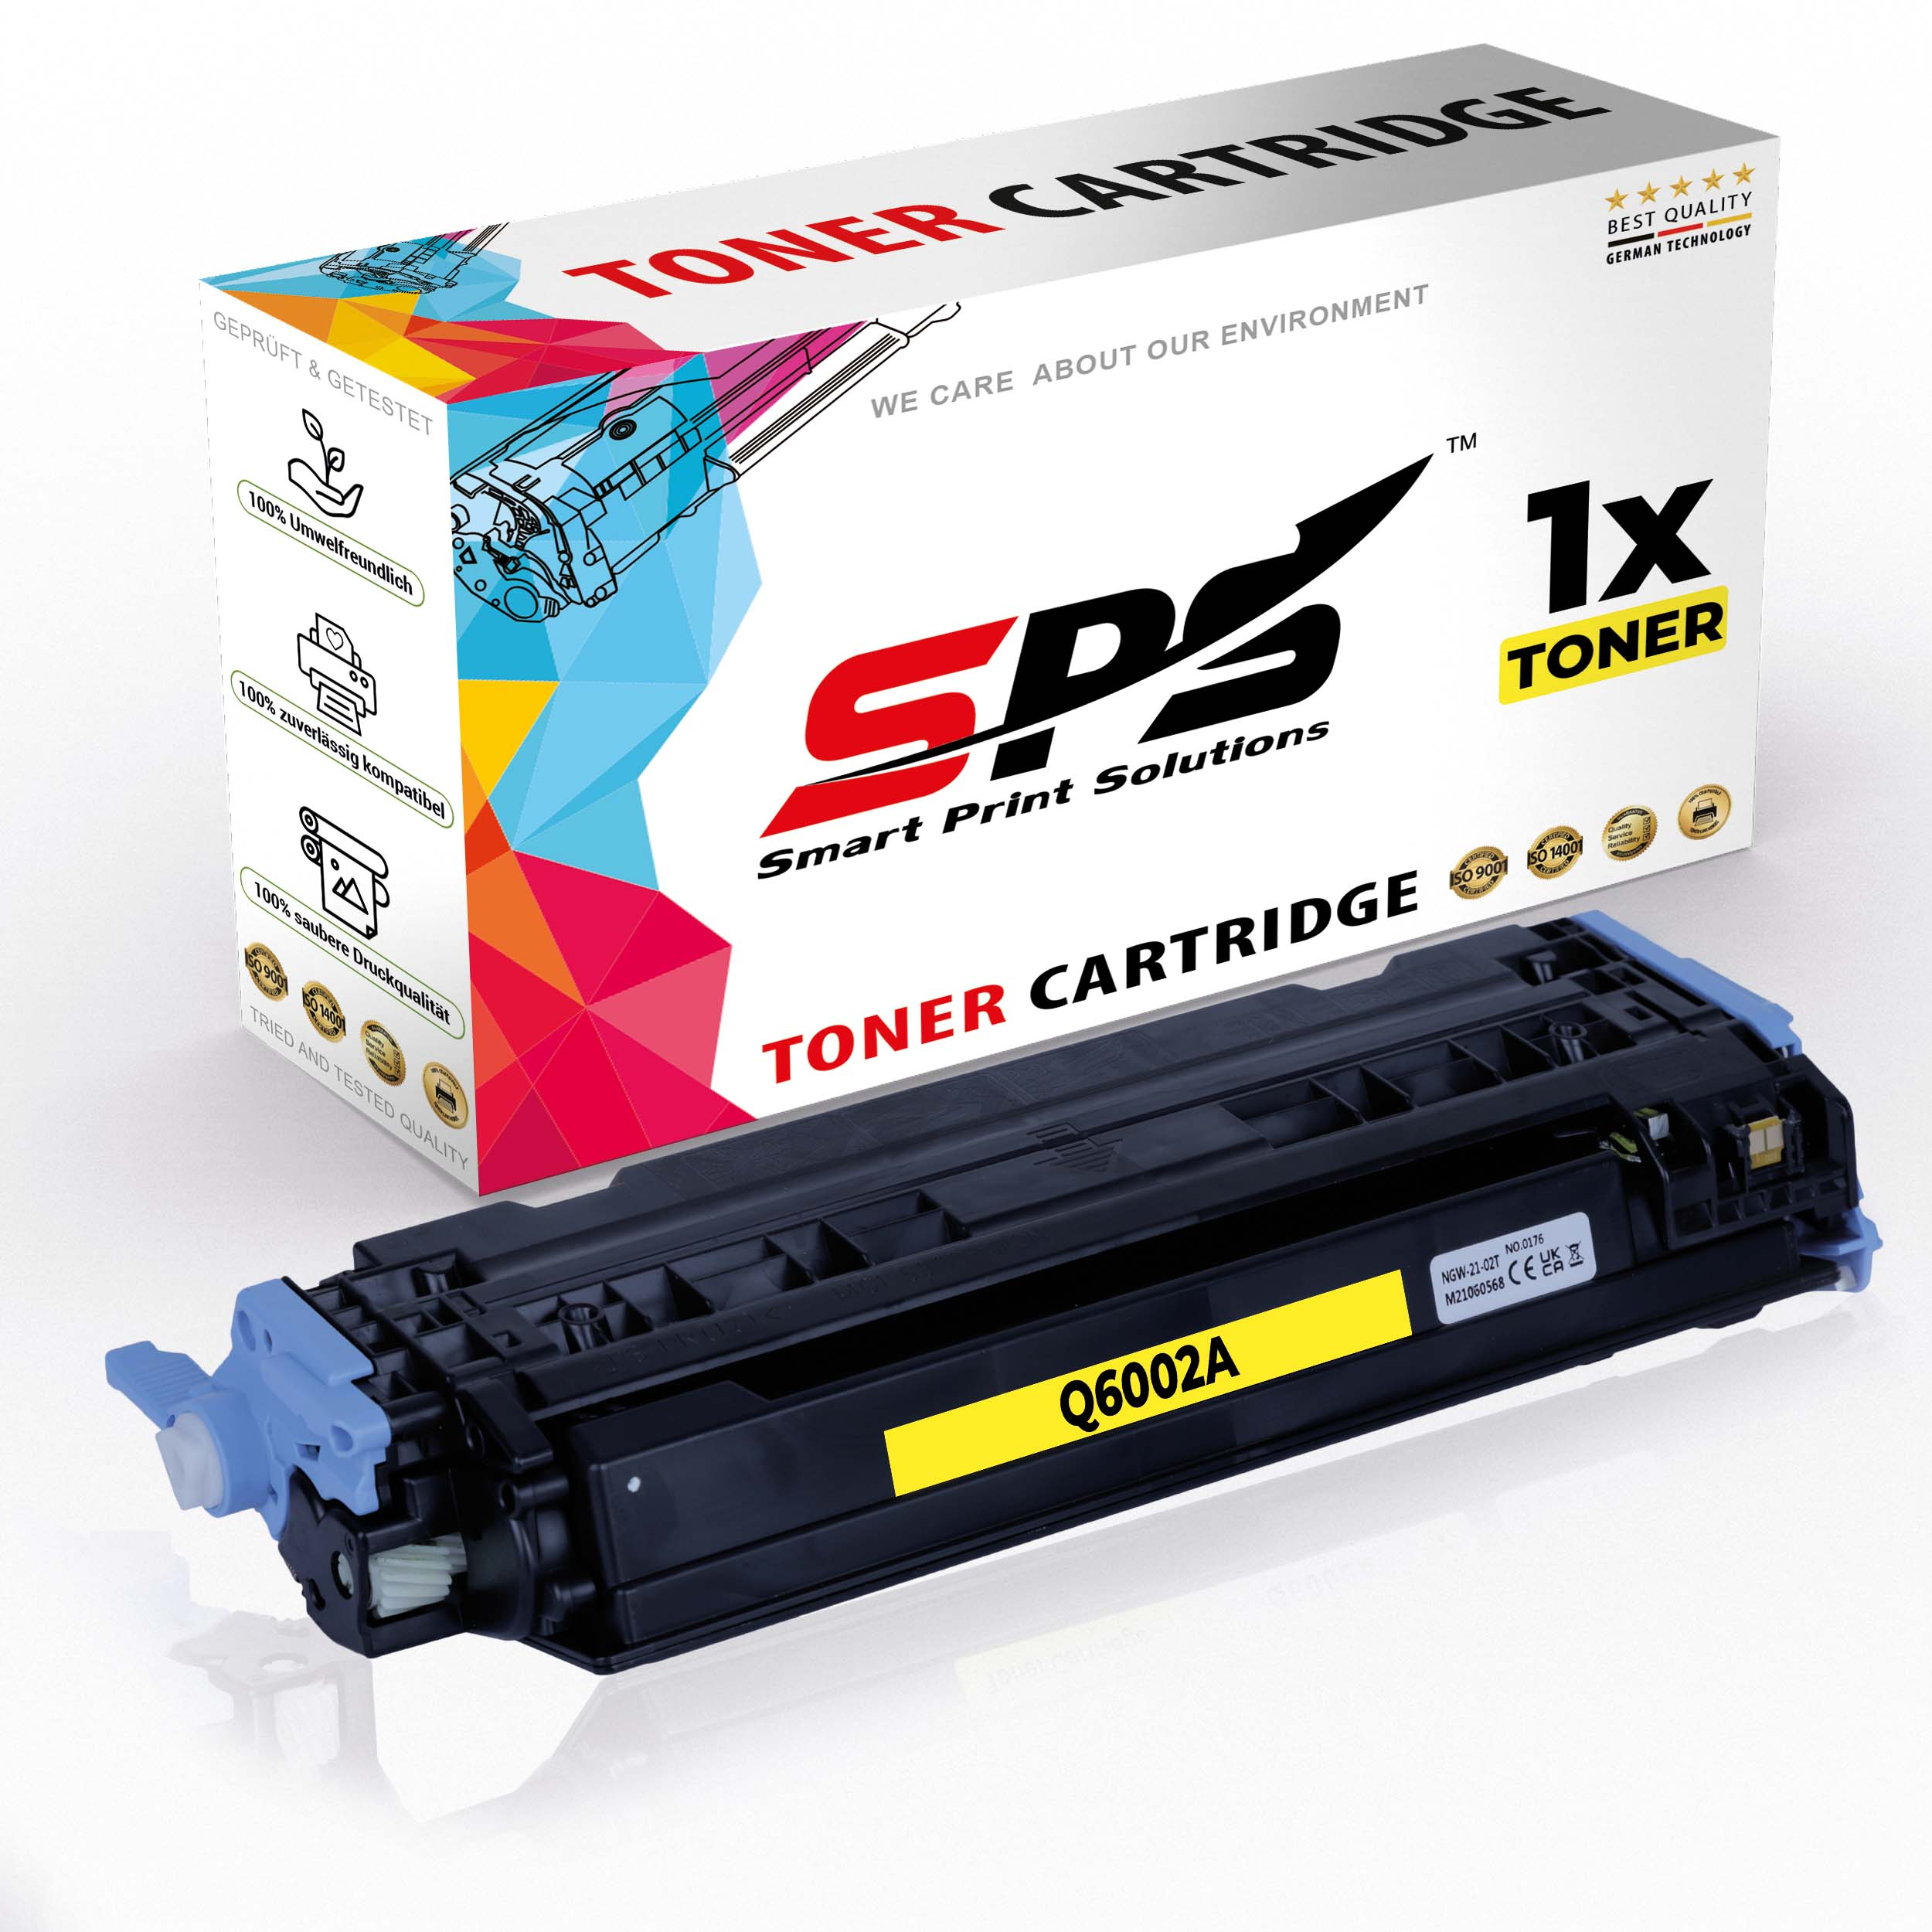 SPS S-8252 Color Gelb Laserjet Toner 124A (Q6002A 2600) 